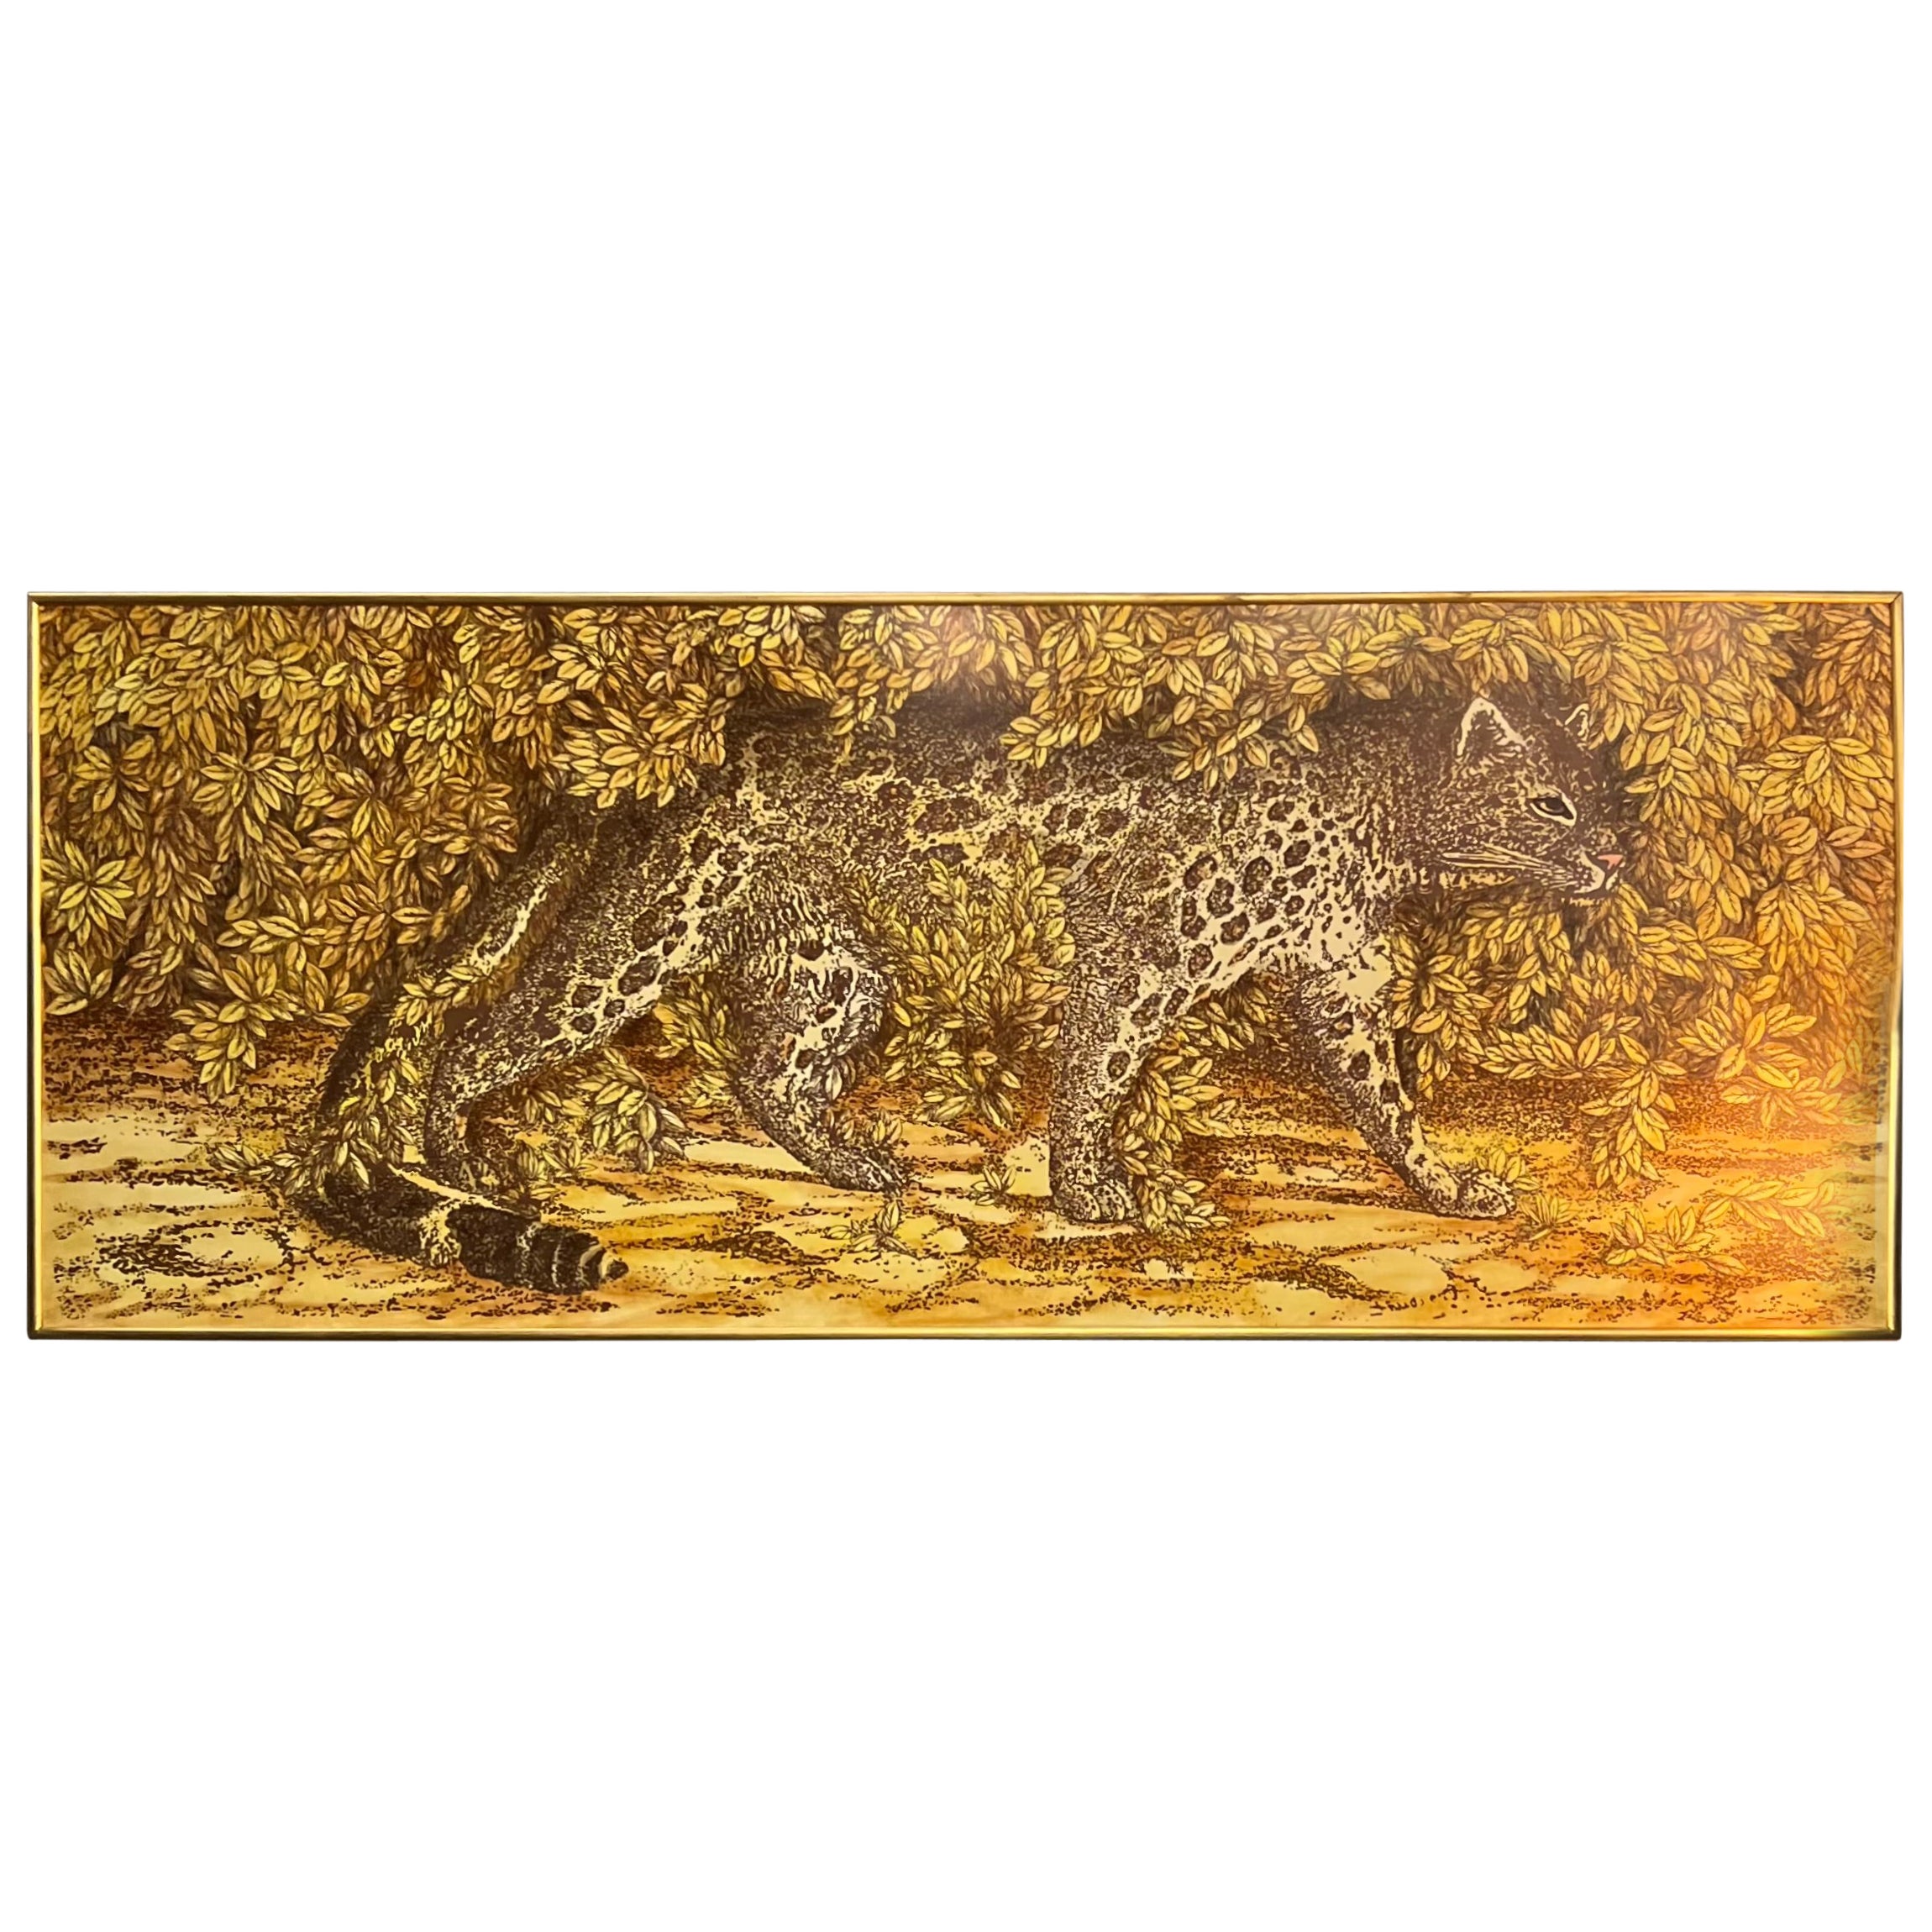 Fornasetti Leopardo-Tafel, handbemalt, Italien, 21. Jahrhundert  im Angebot